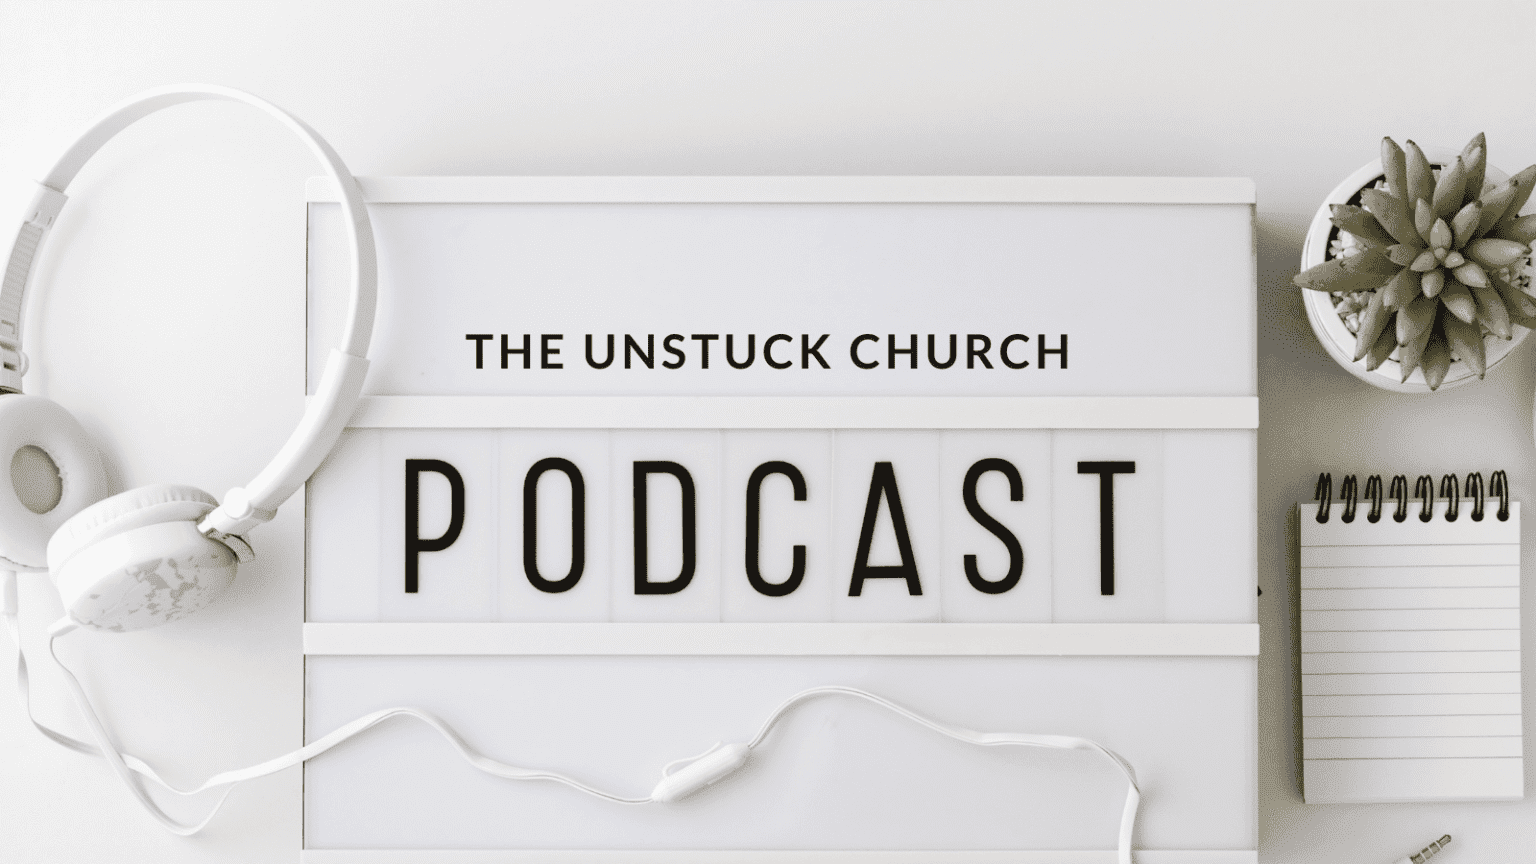 THE UNSTUCK CHURCH (1)